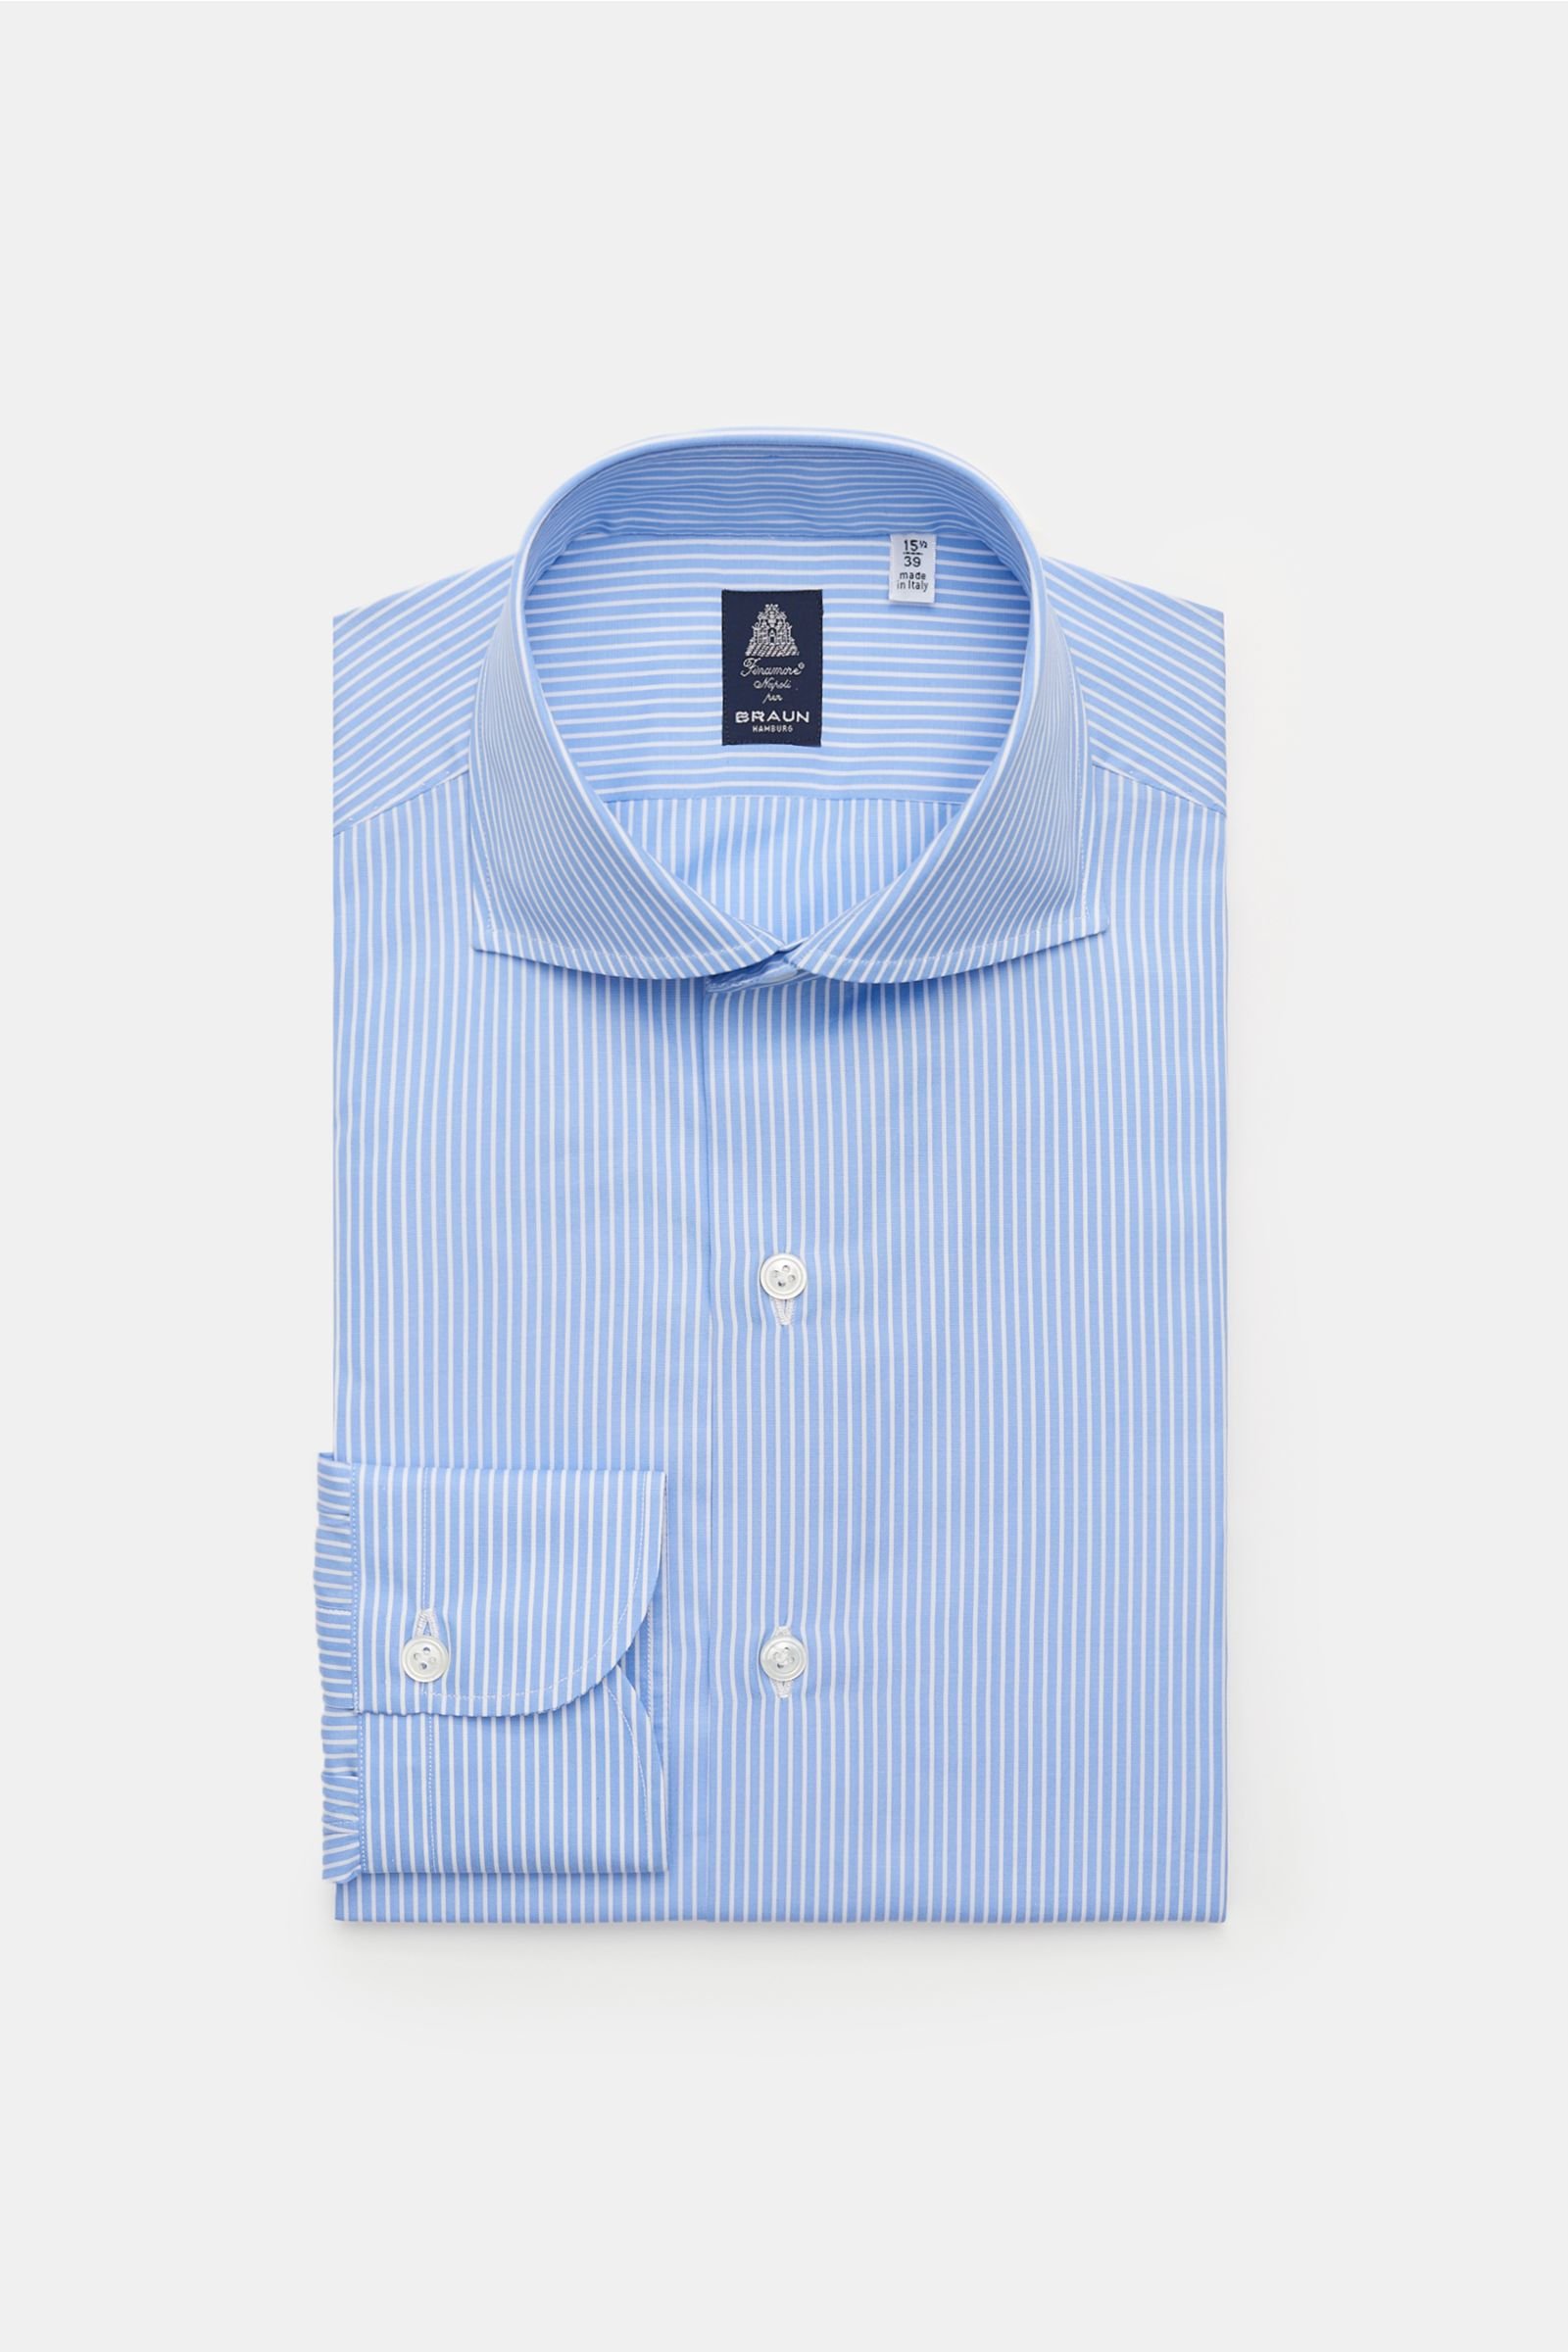 Business shirt 'Eduardo Napoli' shark collar light blue/white striped